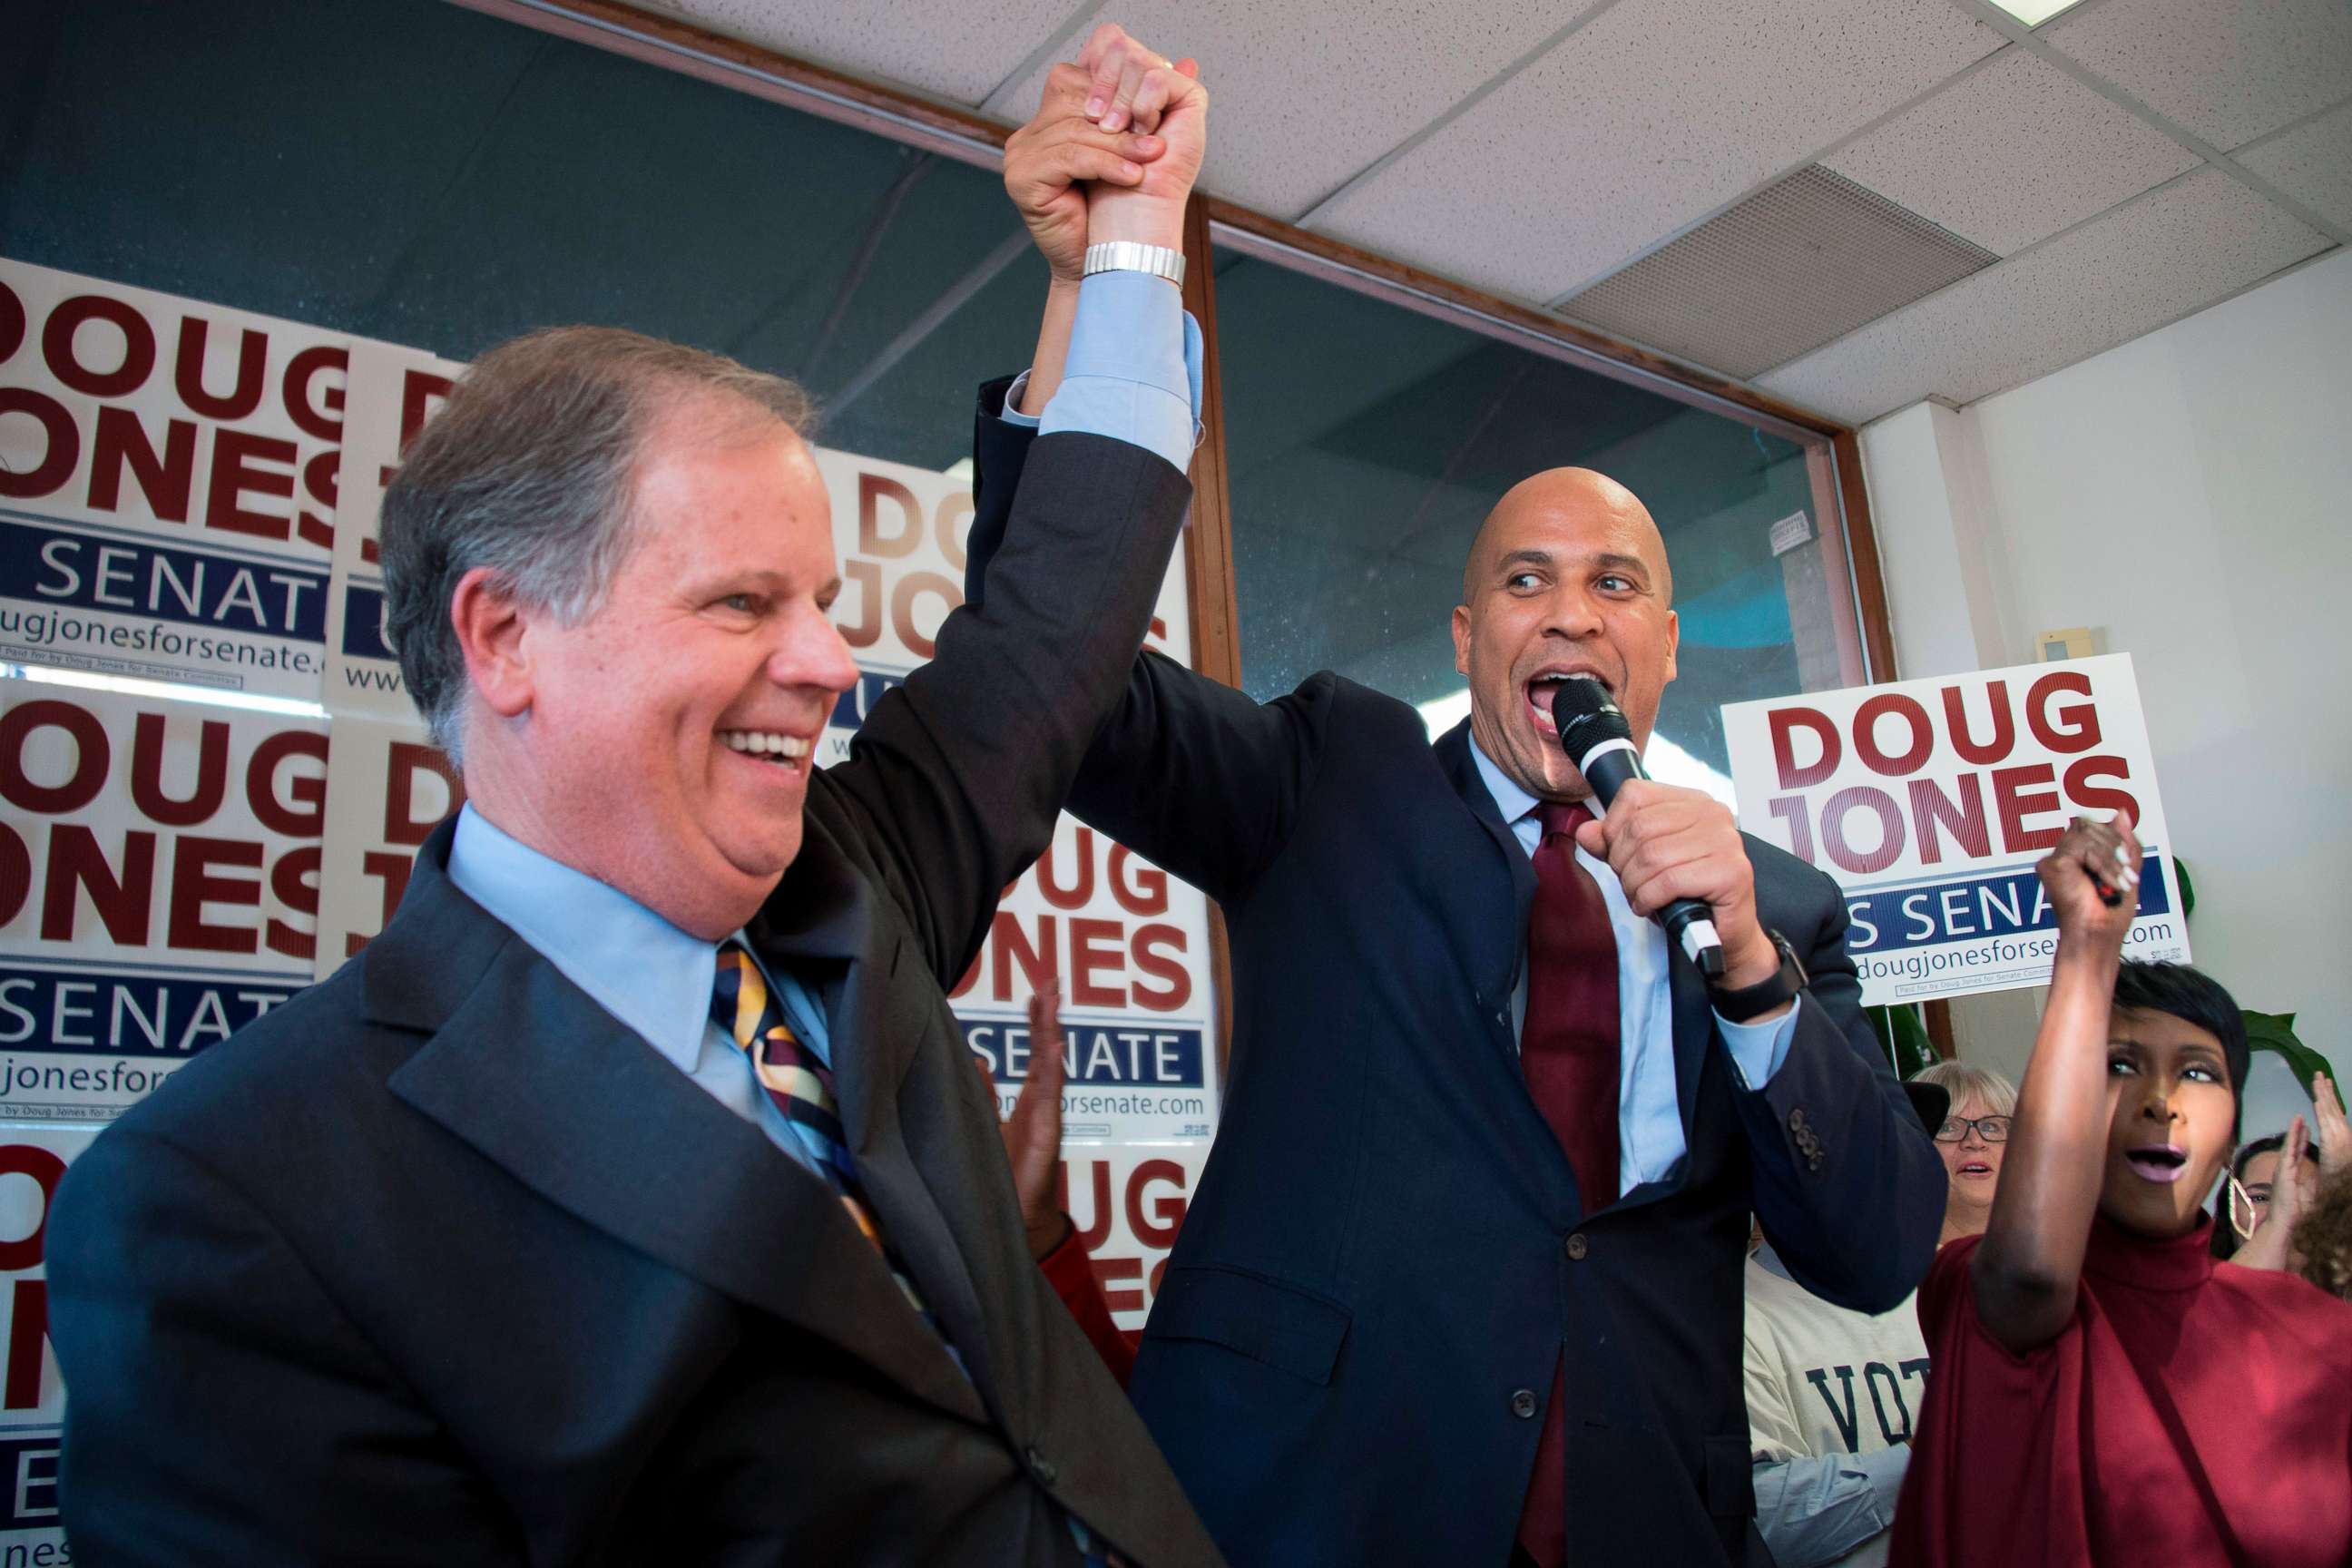 PHOTO: Senator Cory Booker raises the arm of Democratic Senatorial candidate Doug Jones while speaking at Jones' campaign headquarters in Birmingham, Alabama, Dec. 10, 2017.